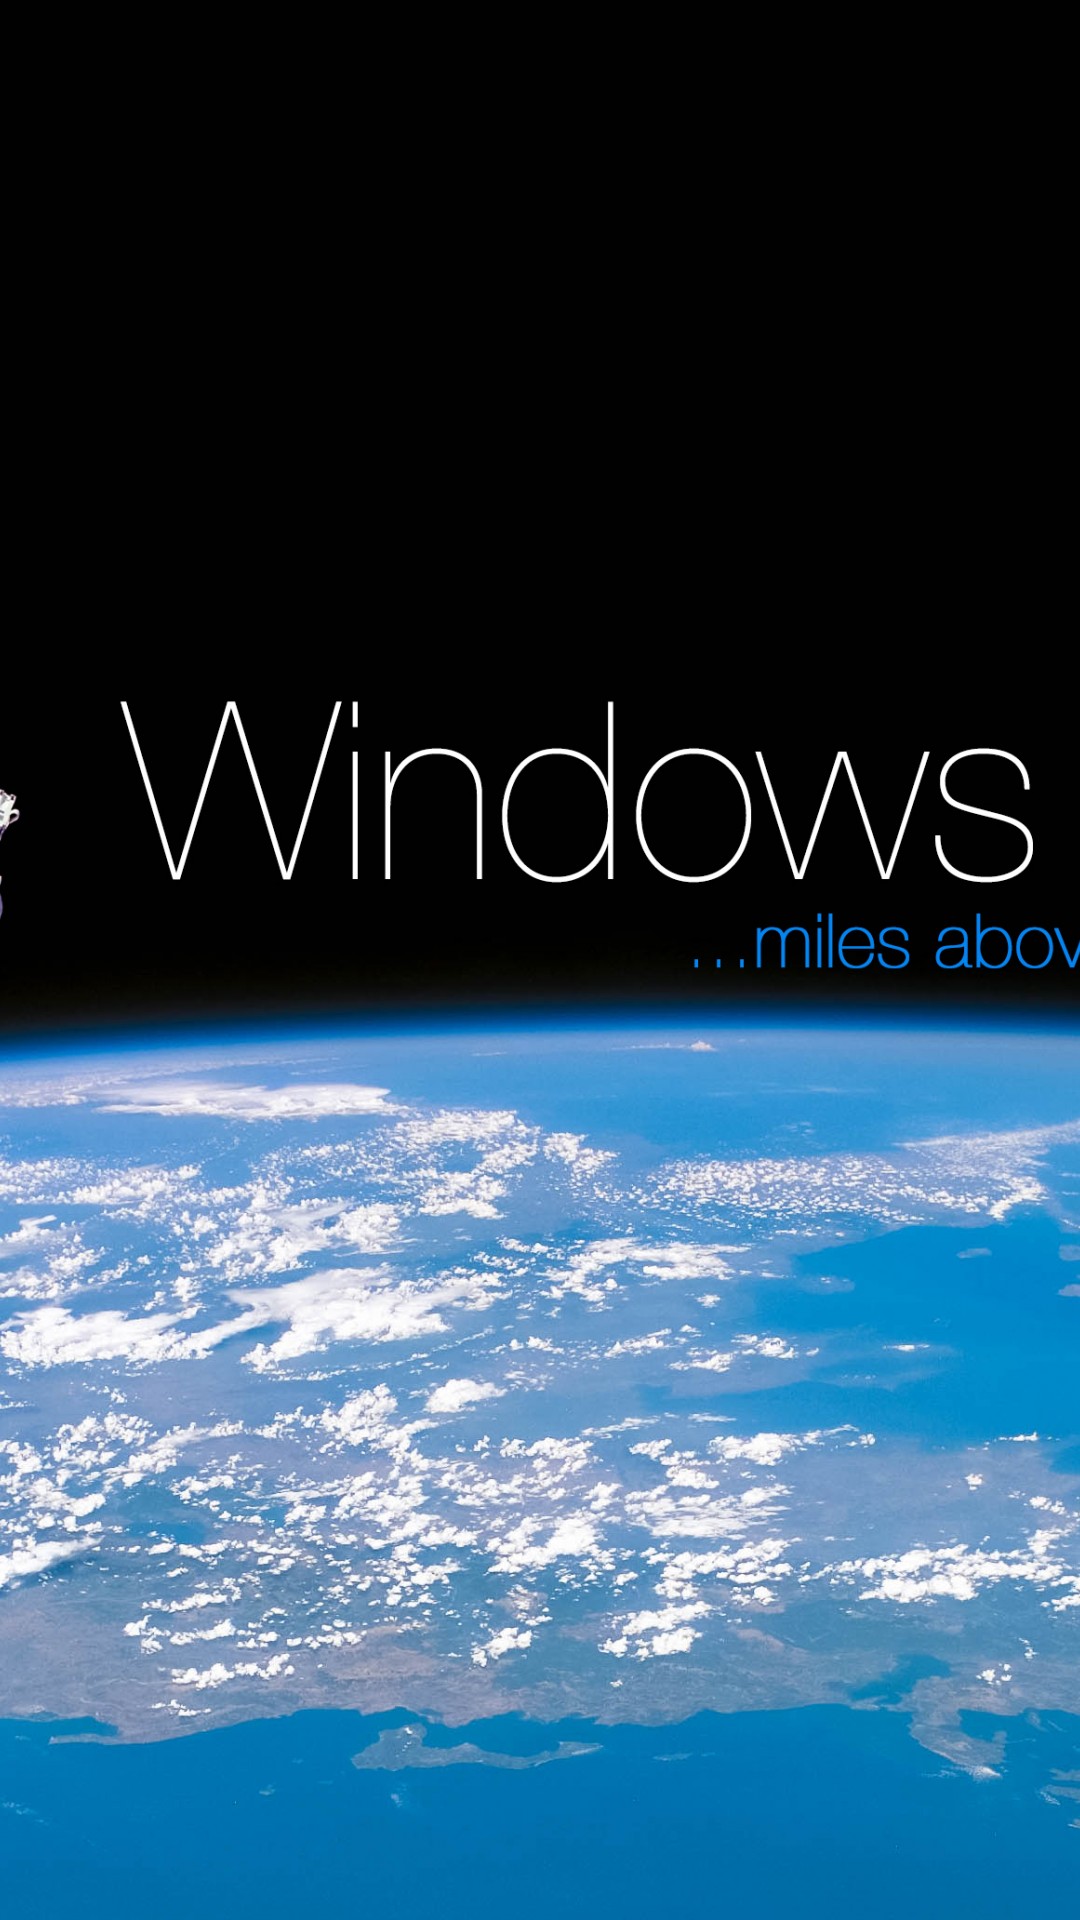 Windows Space 4k Wallpaper iPhone Plus